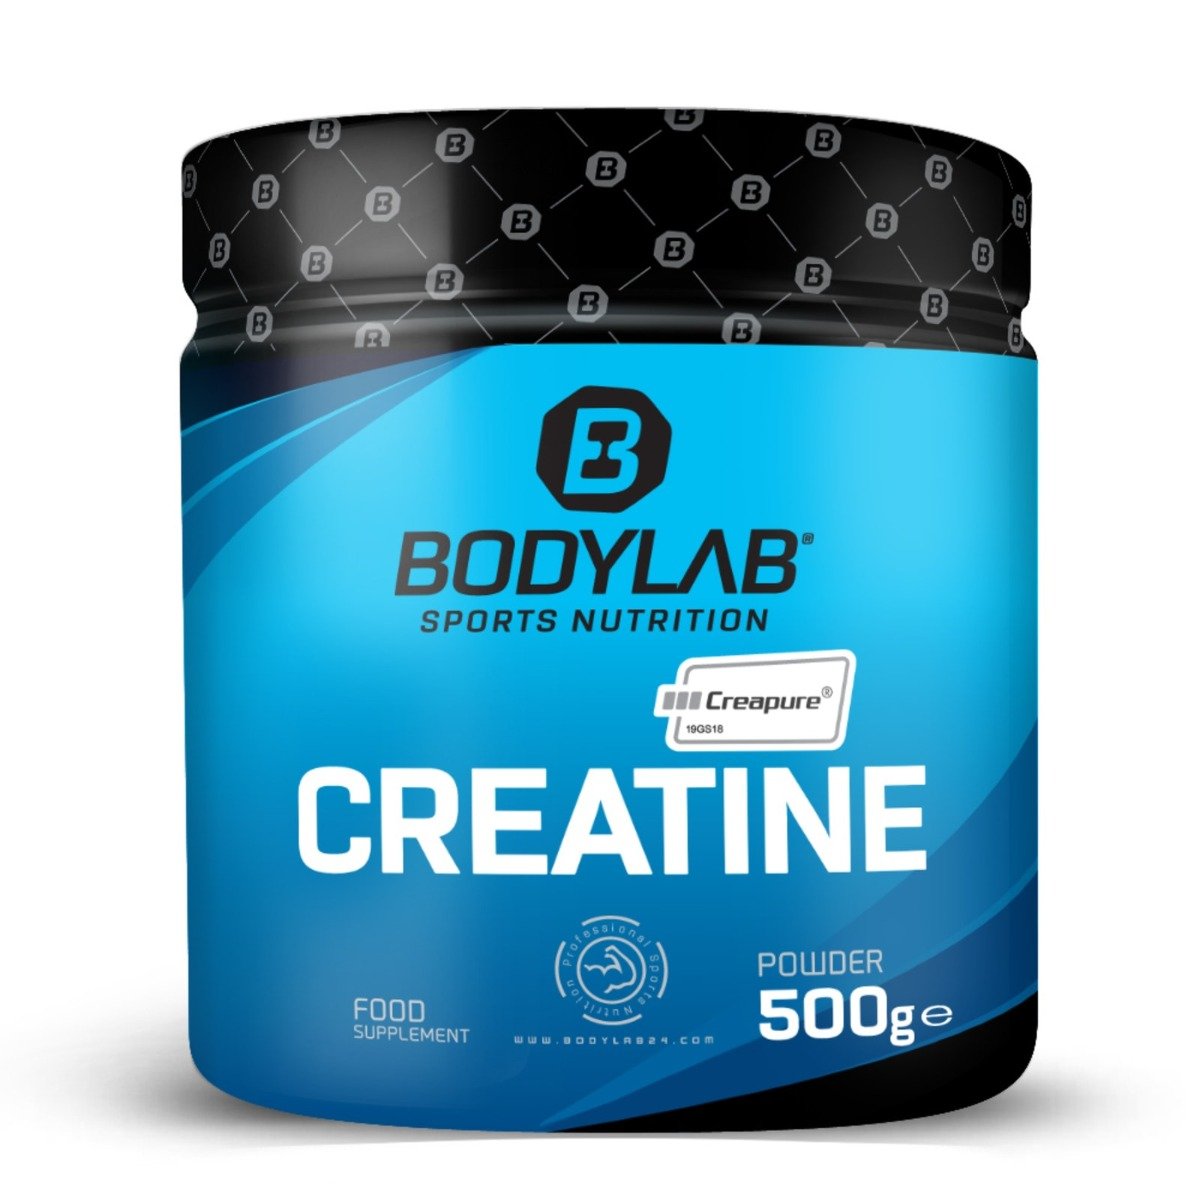 E-shop Creatine (Creapure®) - Bodylab24, 500g